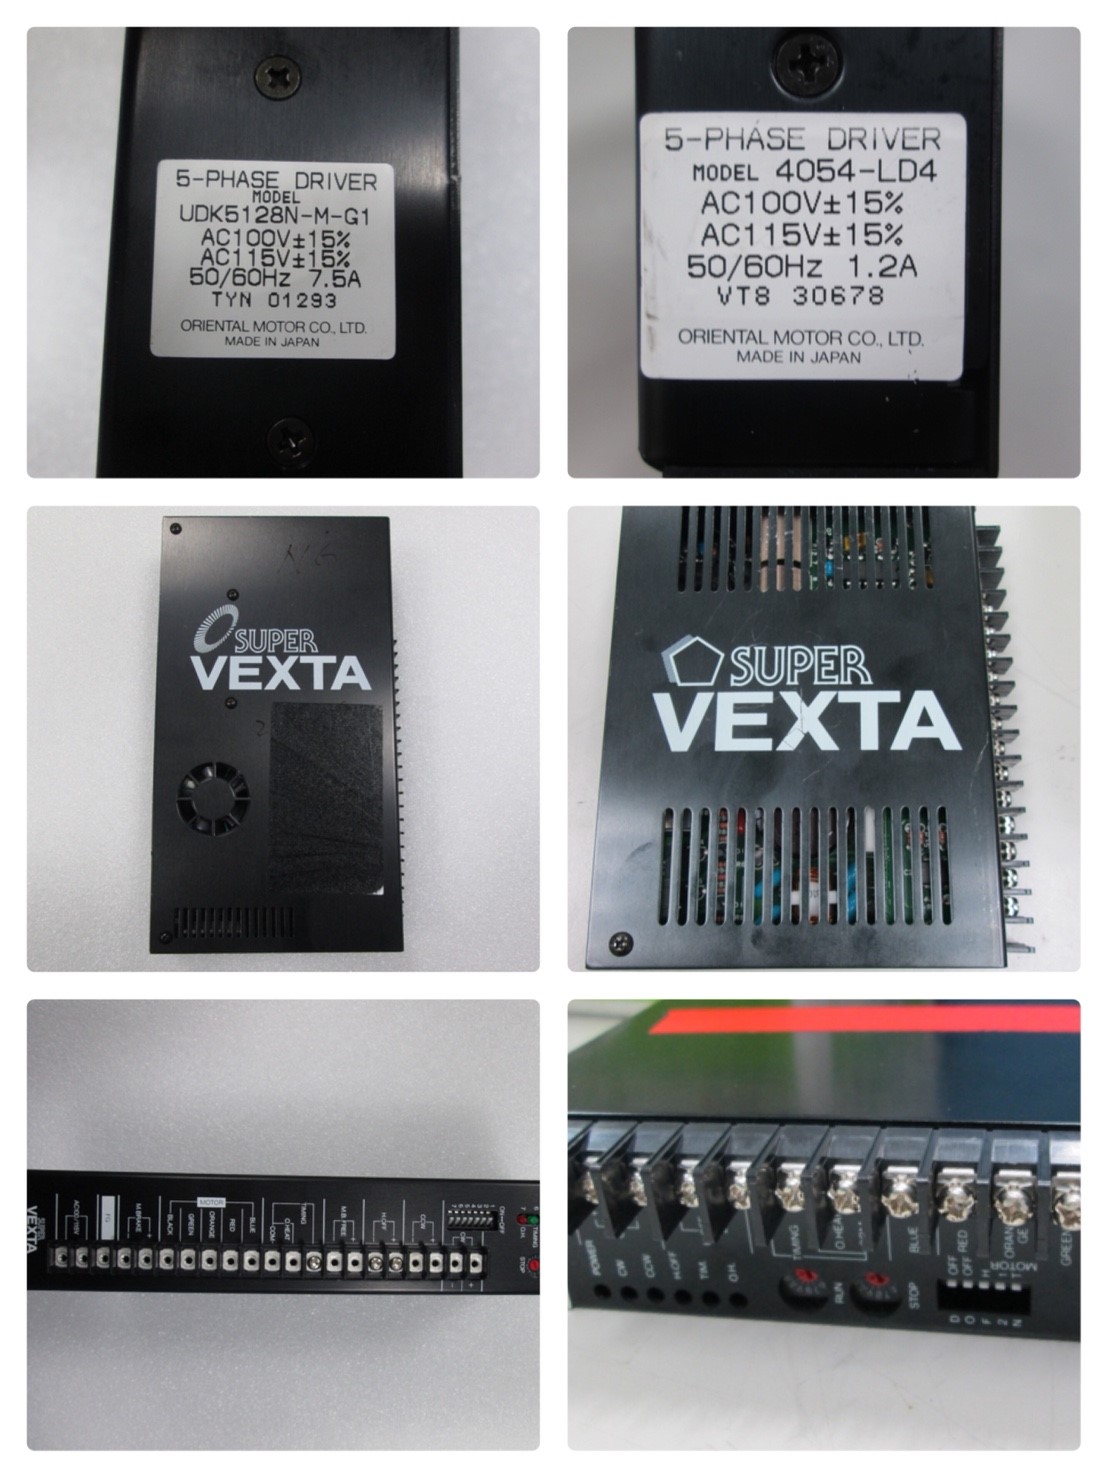 /archive/product/item/images/維修項目/DRIVER/2-VEXTA/Vexta Driver_180830_0017.jpg